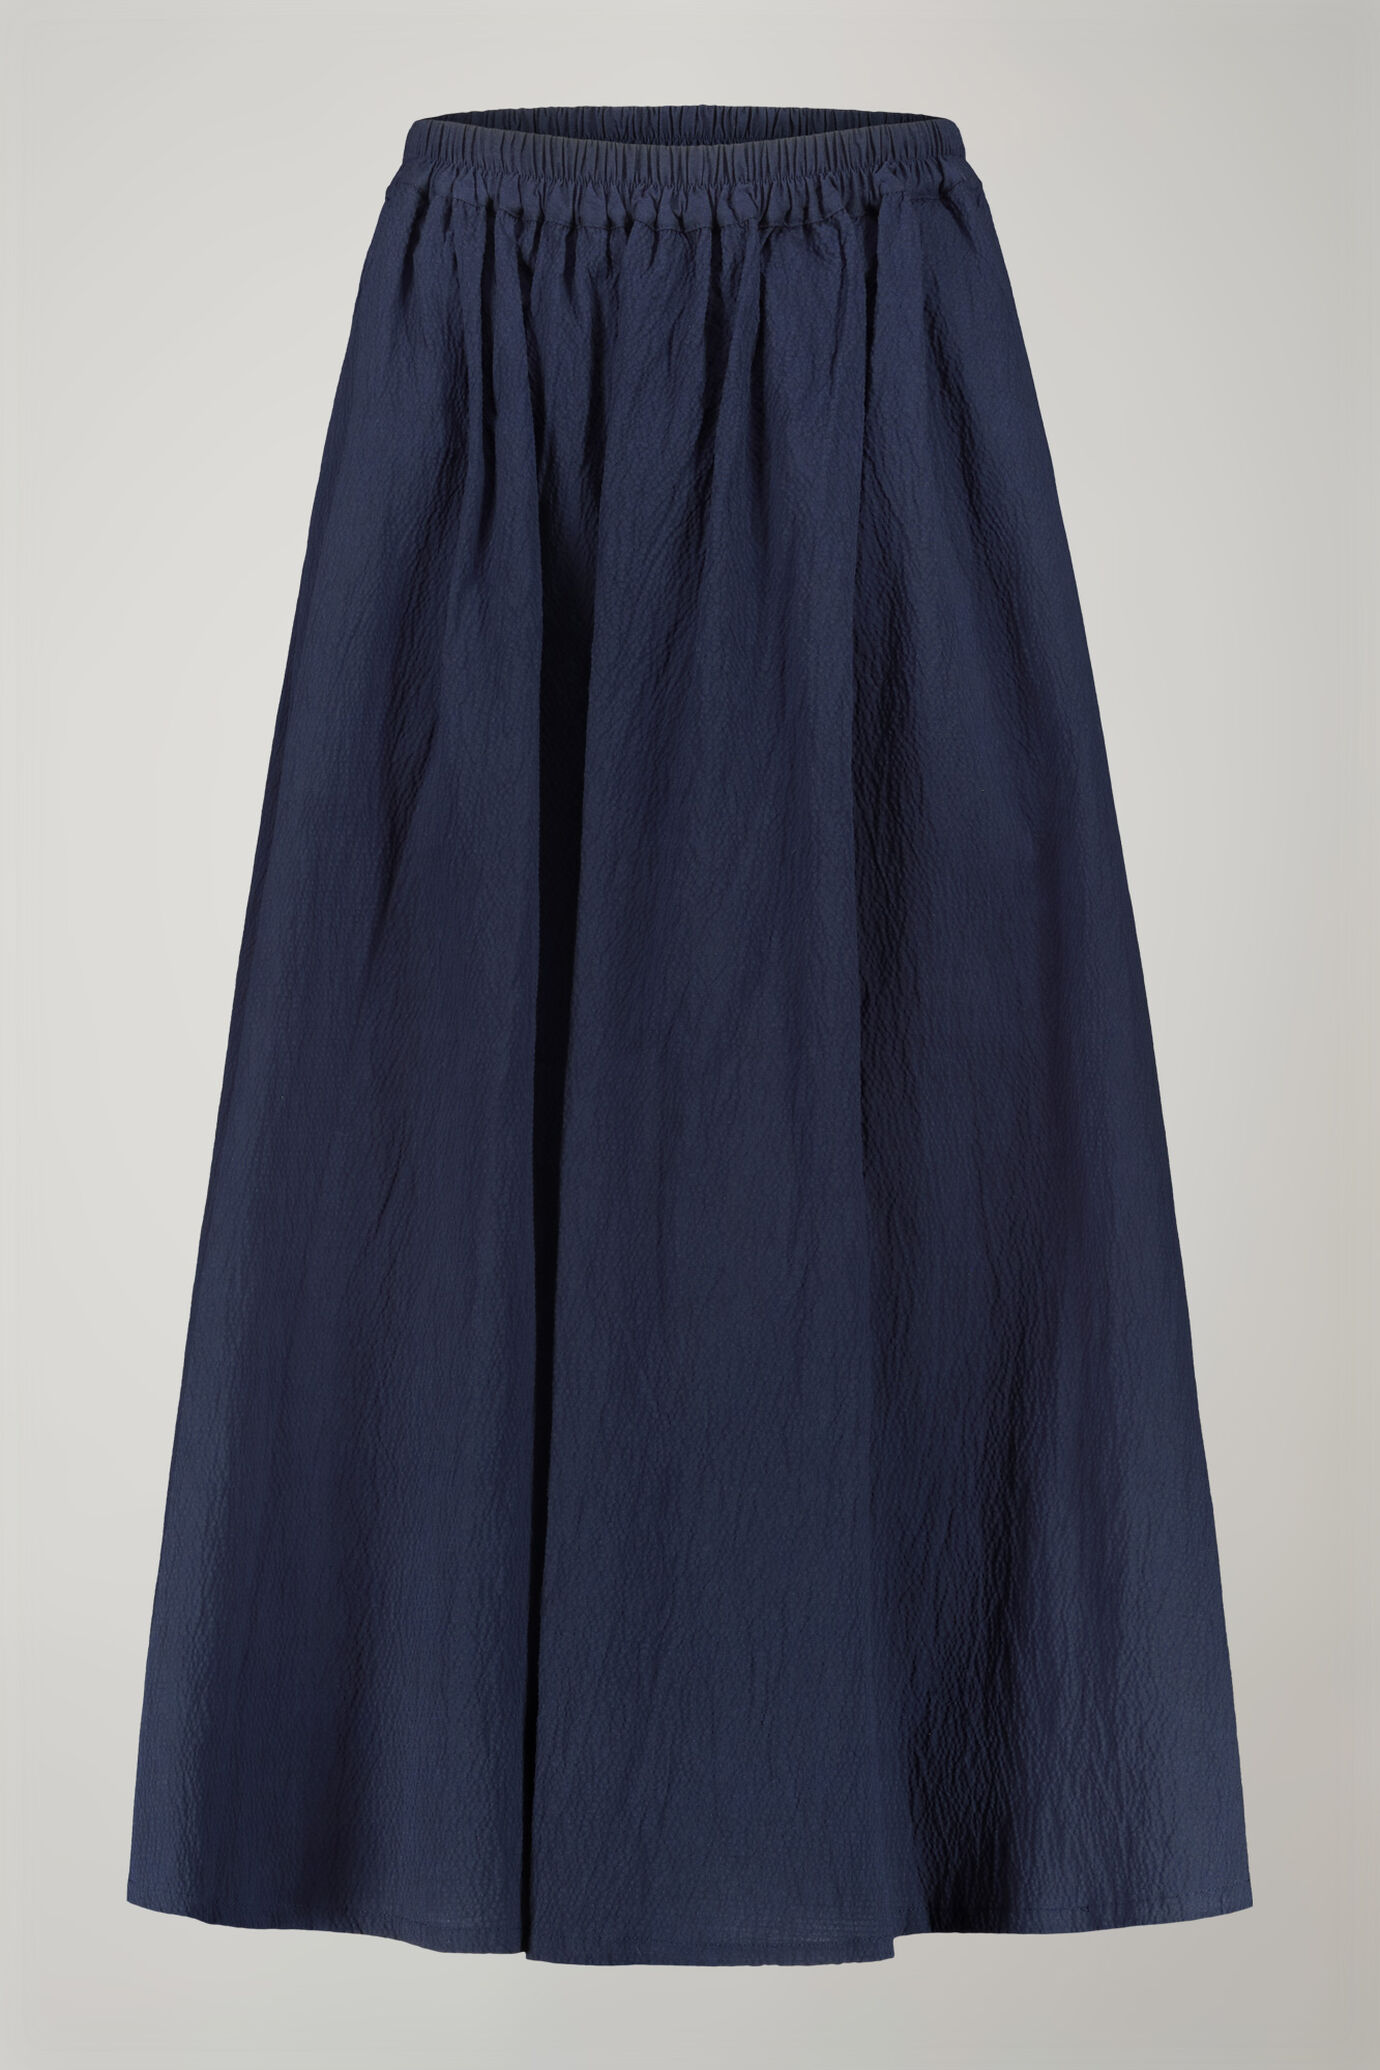 Women's solid color embossed cotton skirt regular fit image number 4